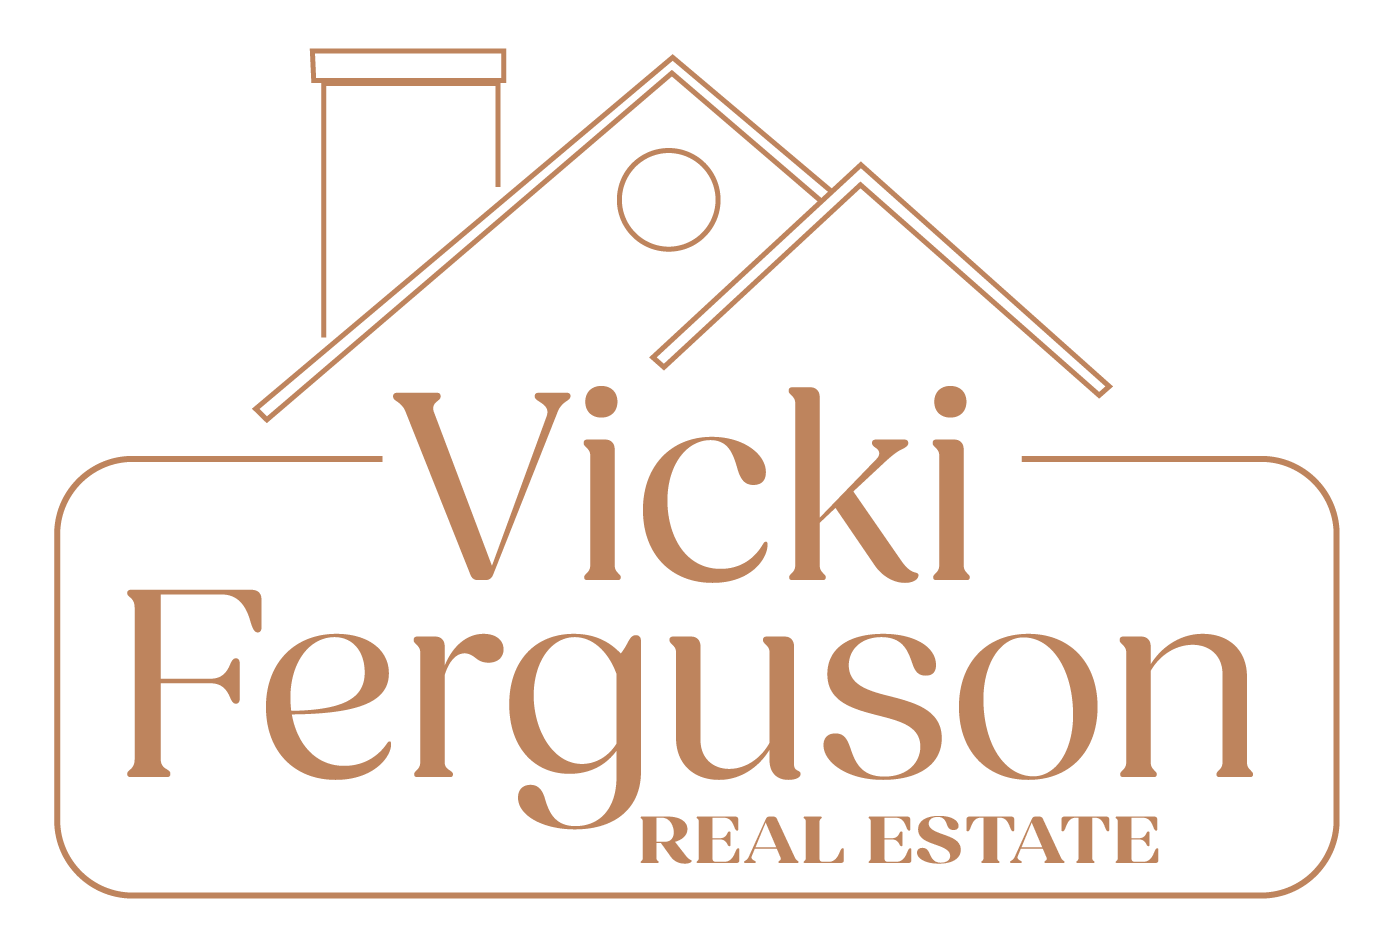 Vicki Ferguson Real Estate